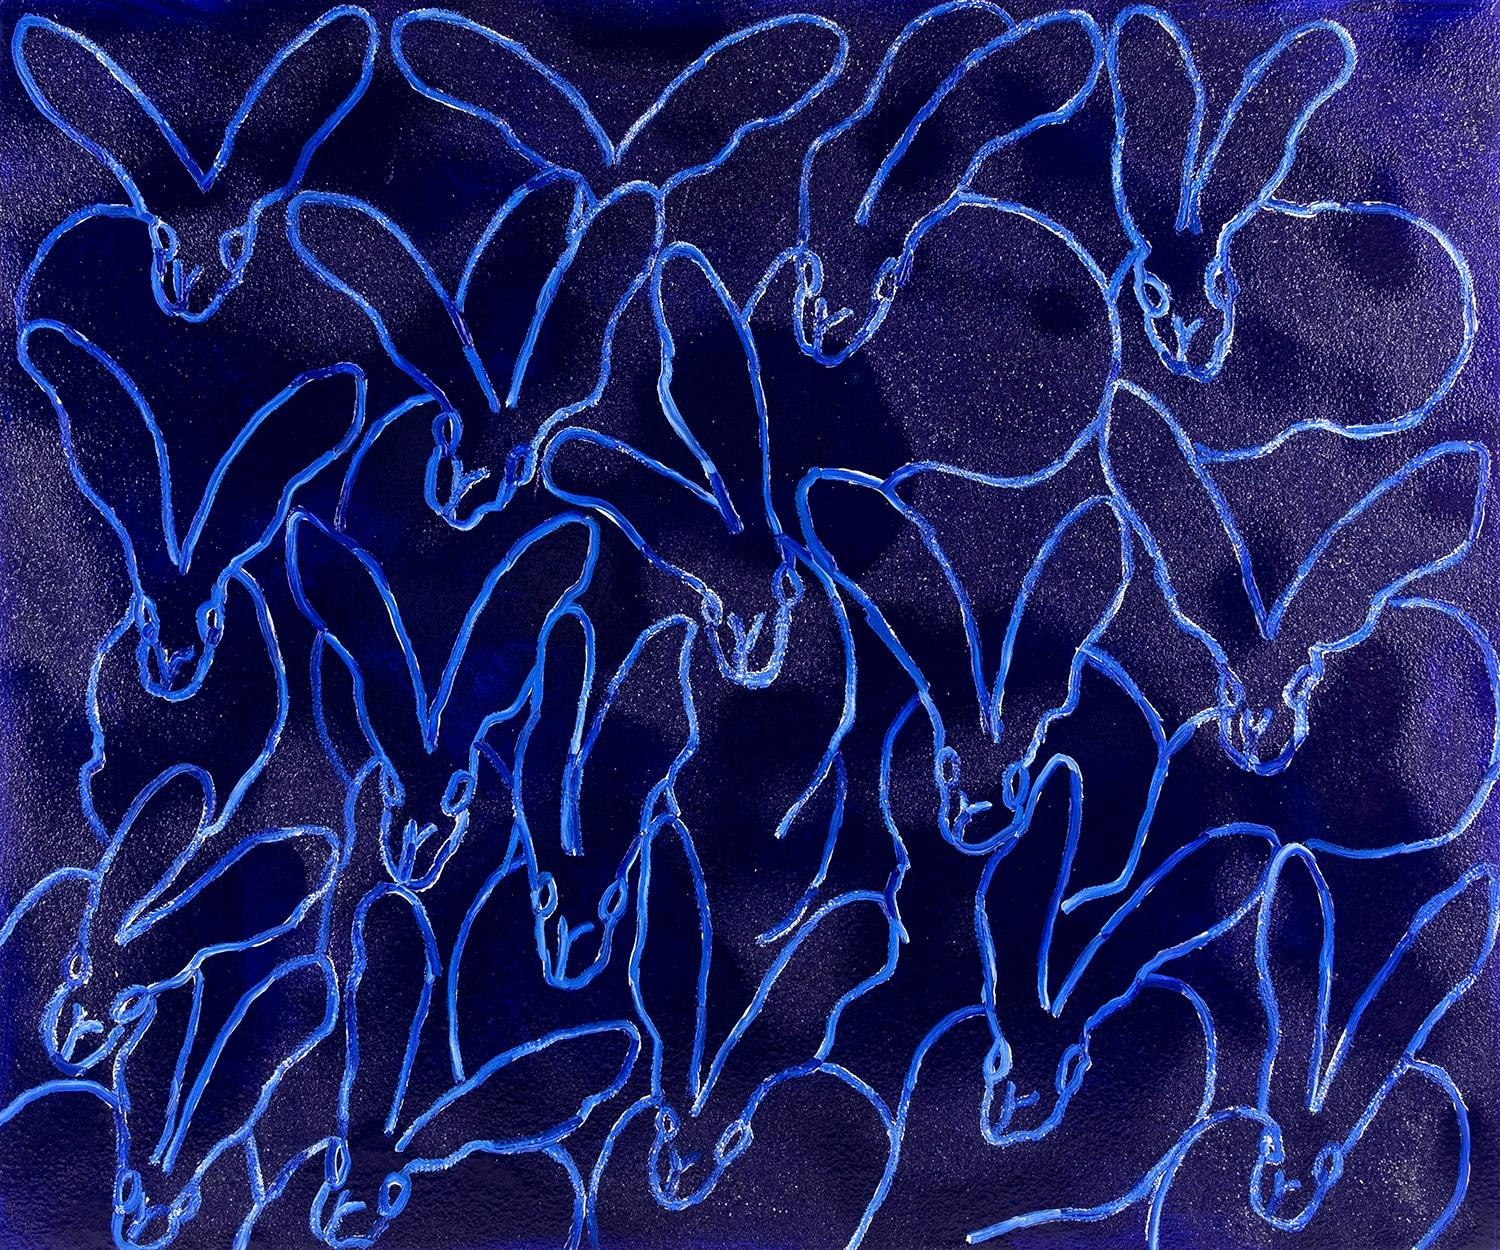 Hunt Slonem Animal Painting - Tanzania Blues (Diamond Dust Bunnies on Ultramarine Blue) Oil Painting on Canvas